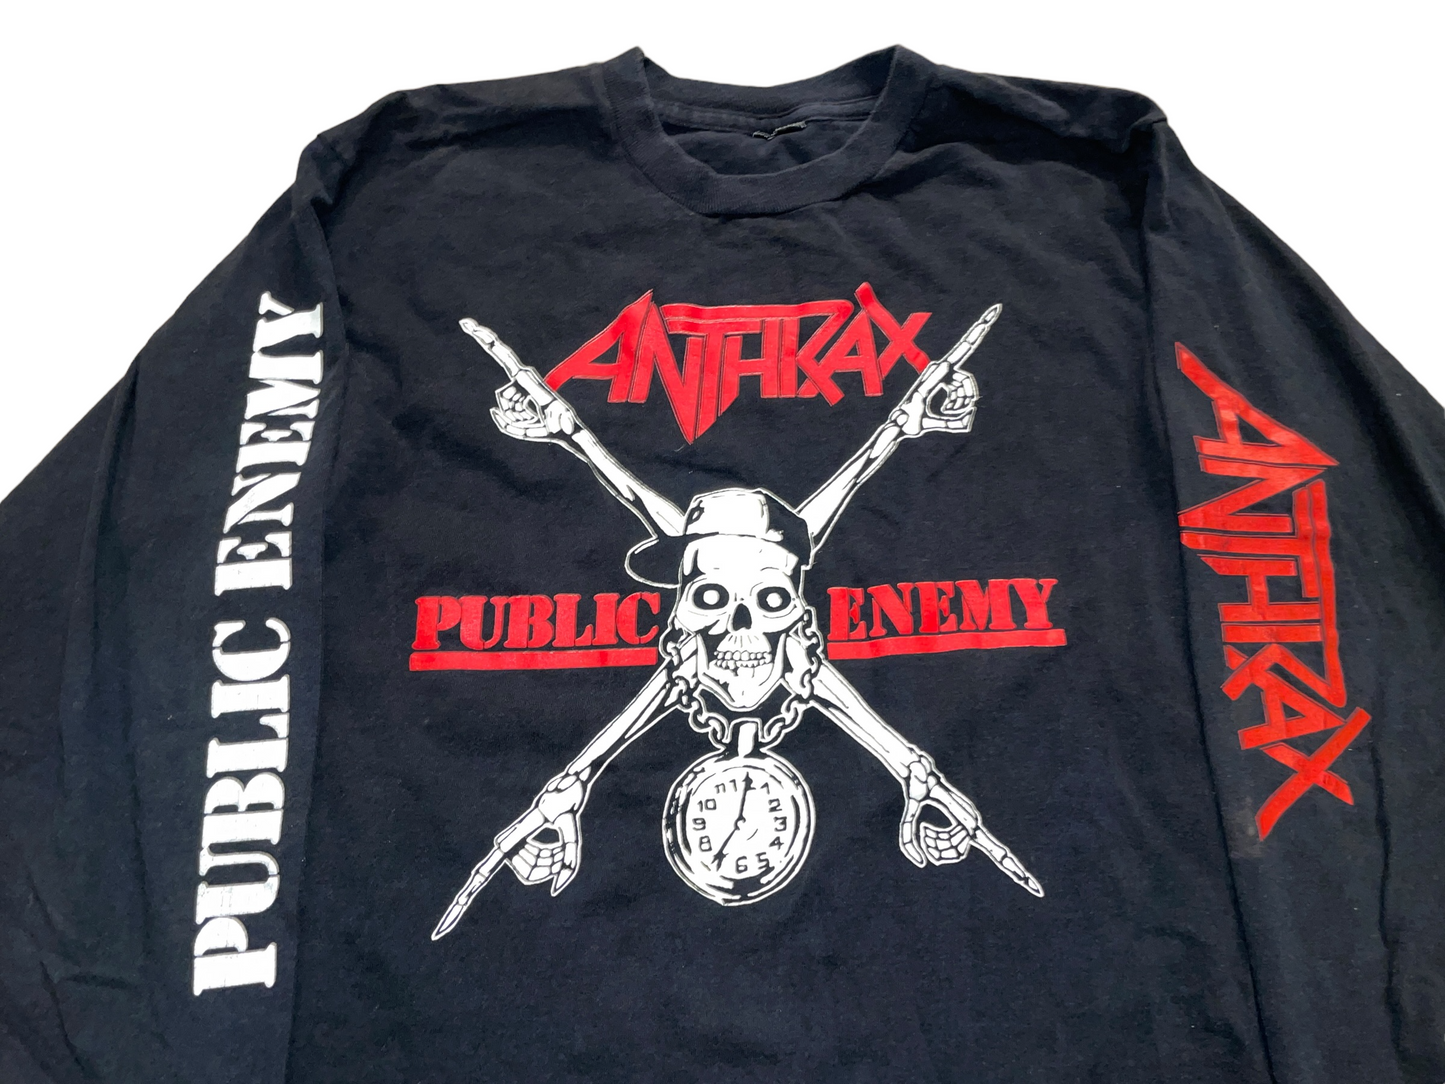 Vintage 90's Anthrax Public Enemy Long Sleeve